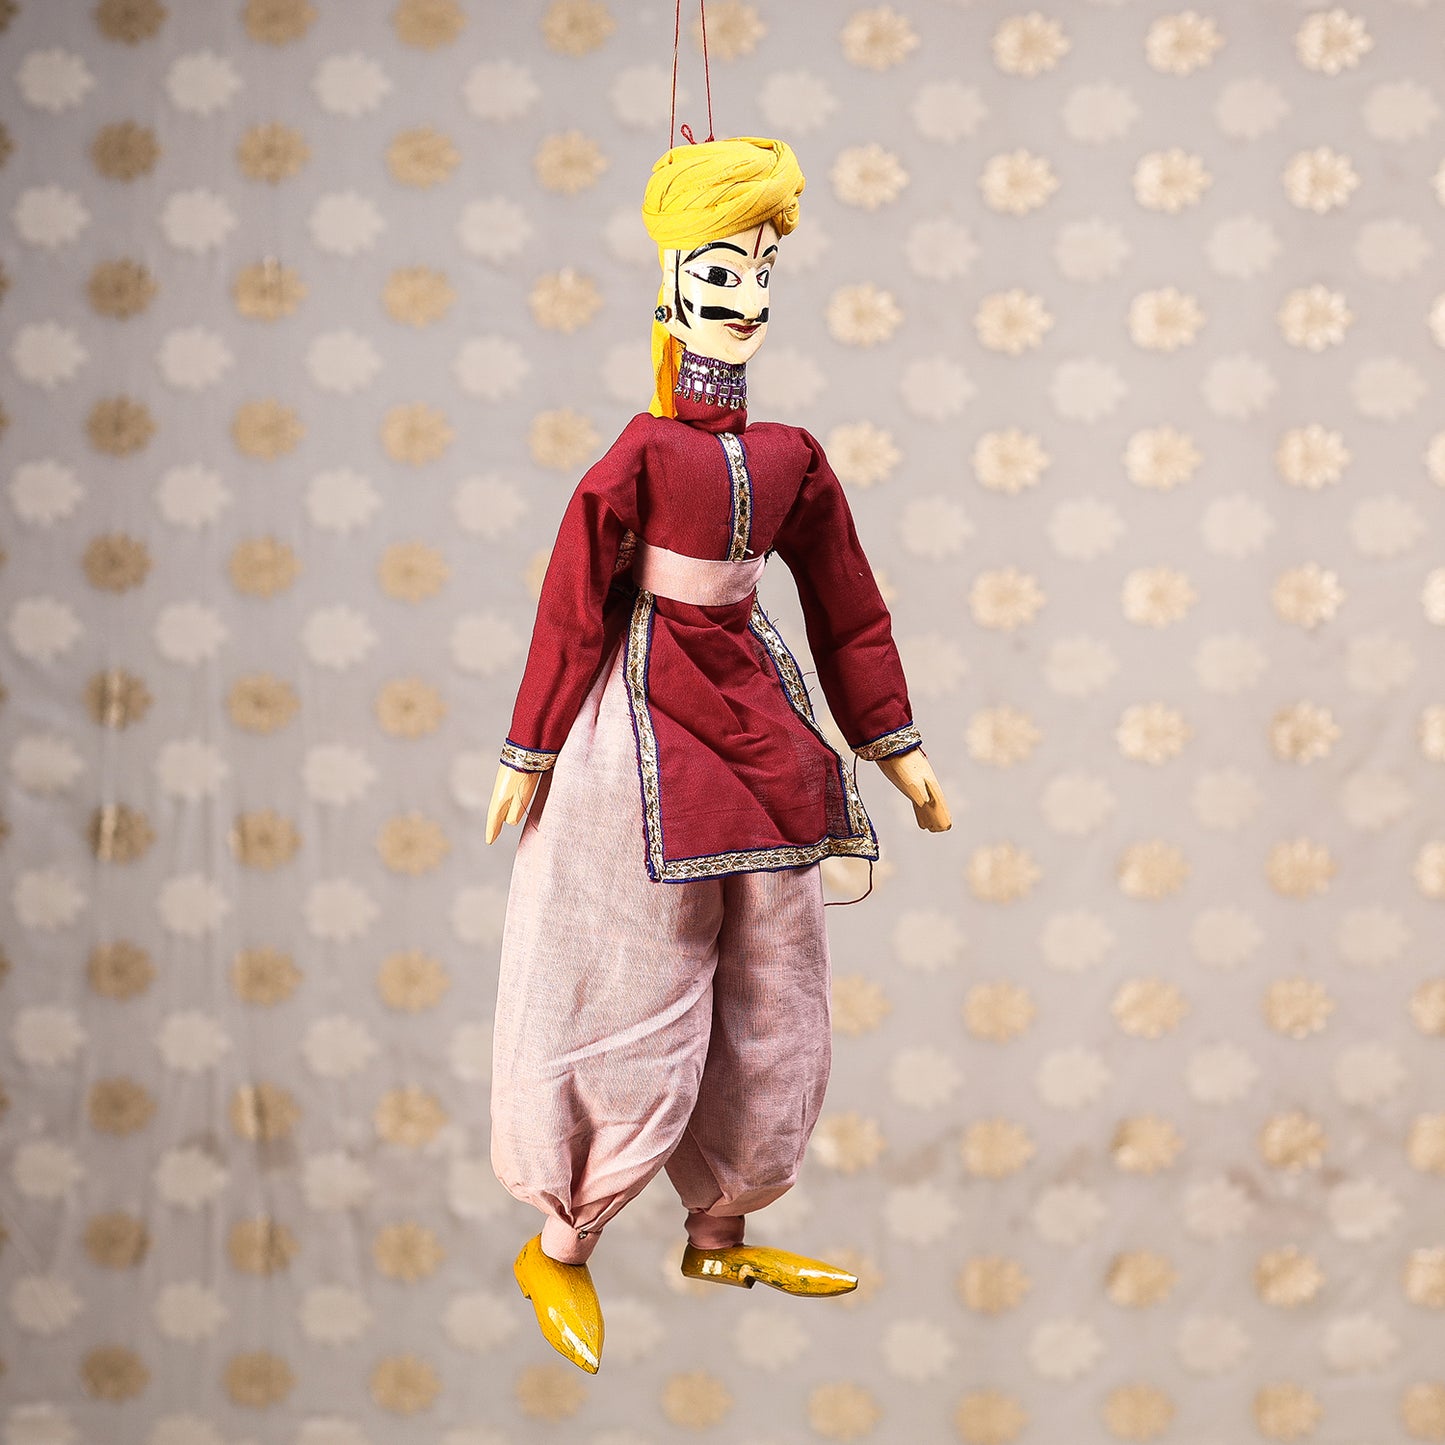 Rajasthani Men Handmade Puppet/Kathputli